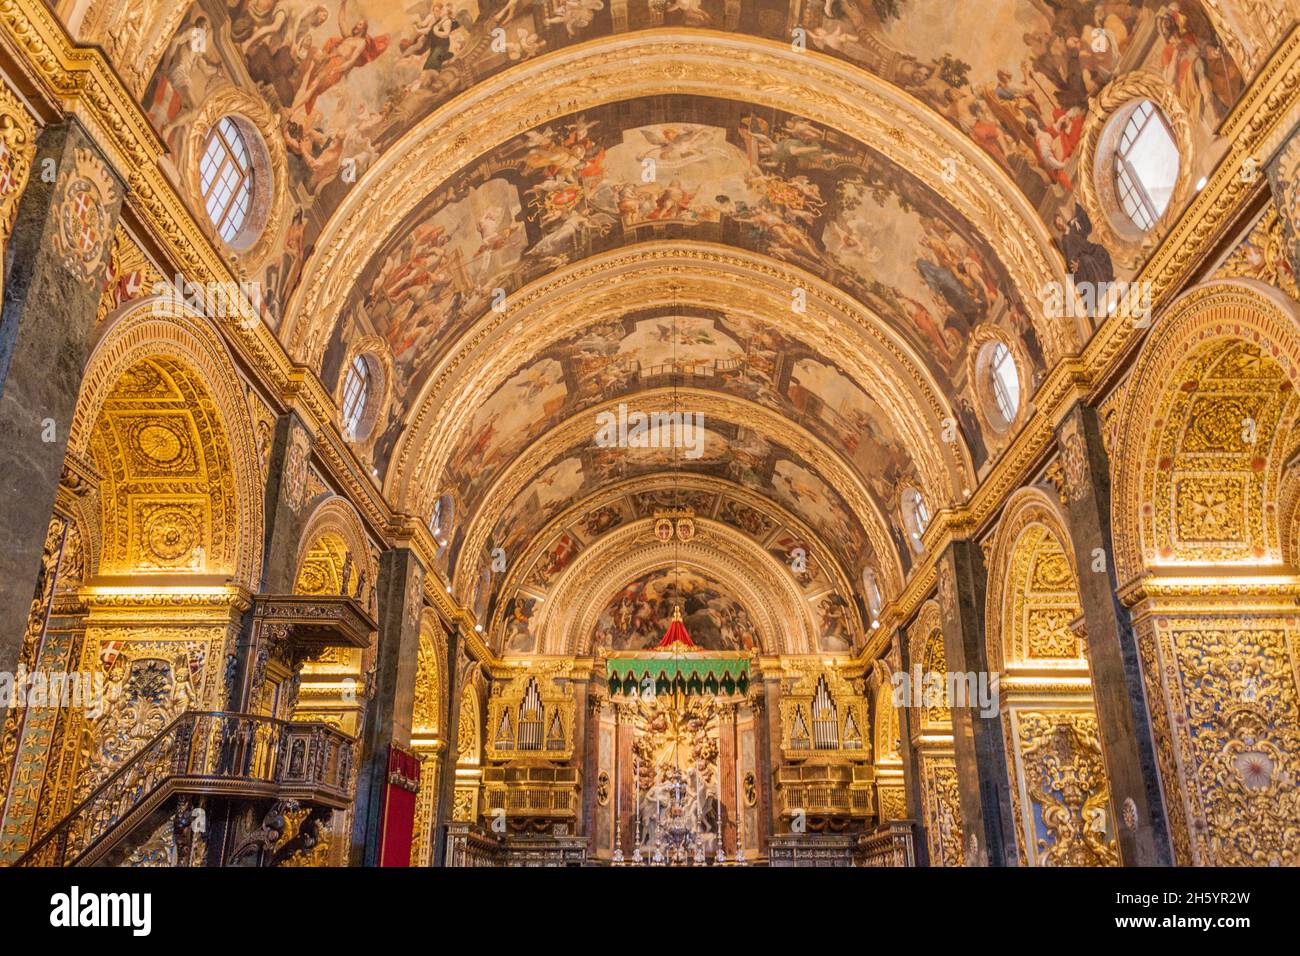 VALLETTA, MALTA - NOVEMBER 7, 2017: Interior of St John's Co-Cathedral in Valletta, Malta Stock Photo